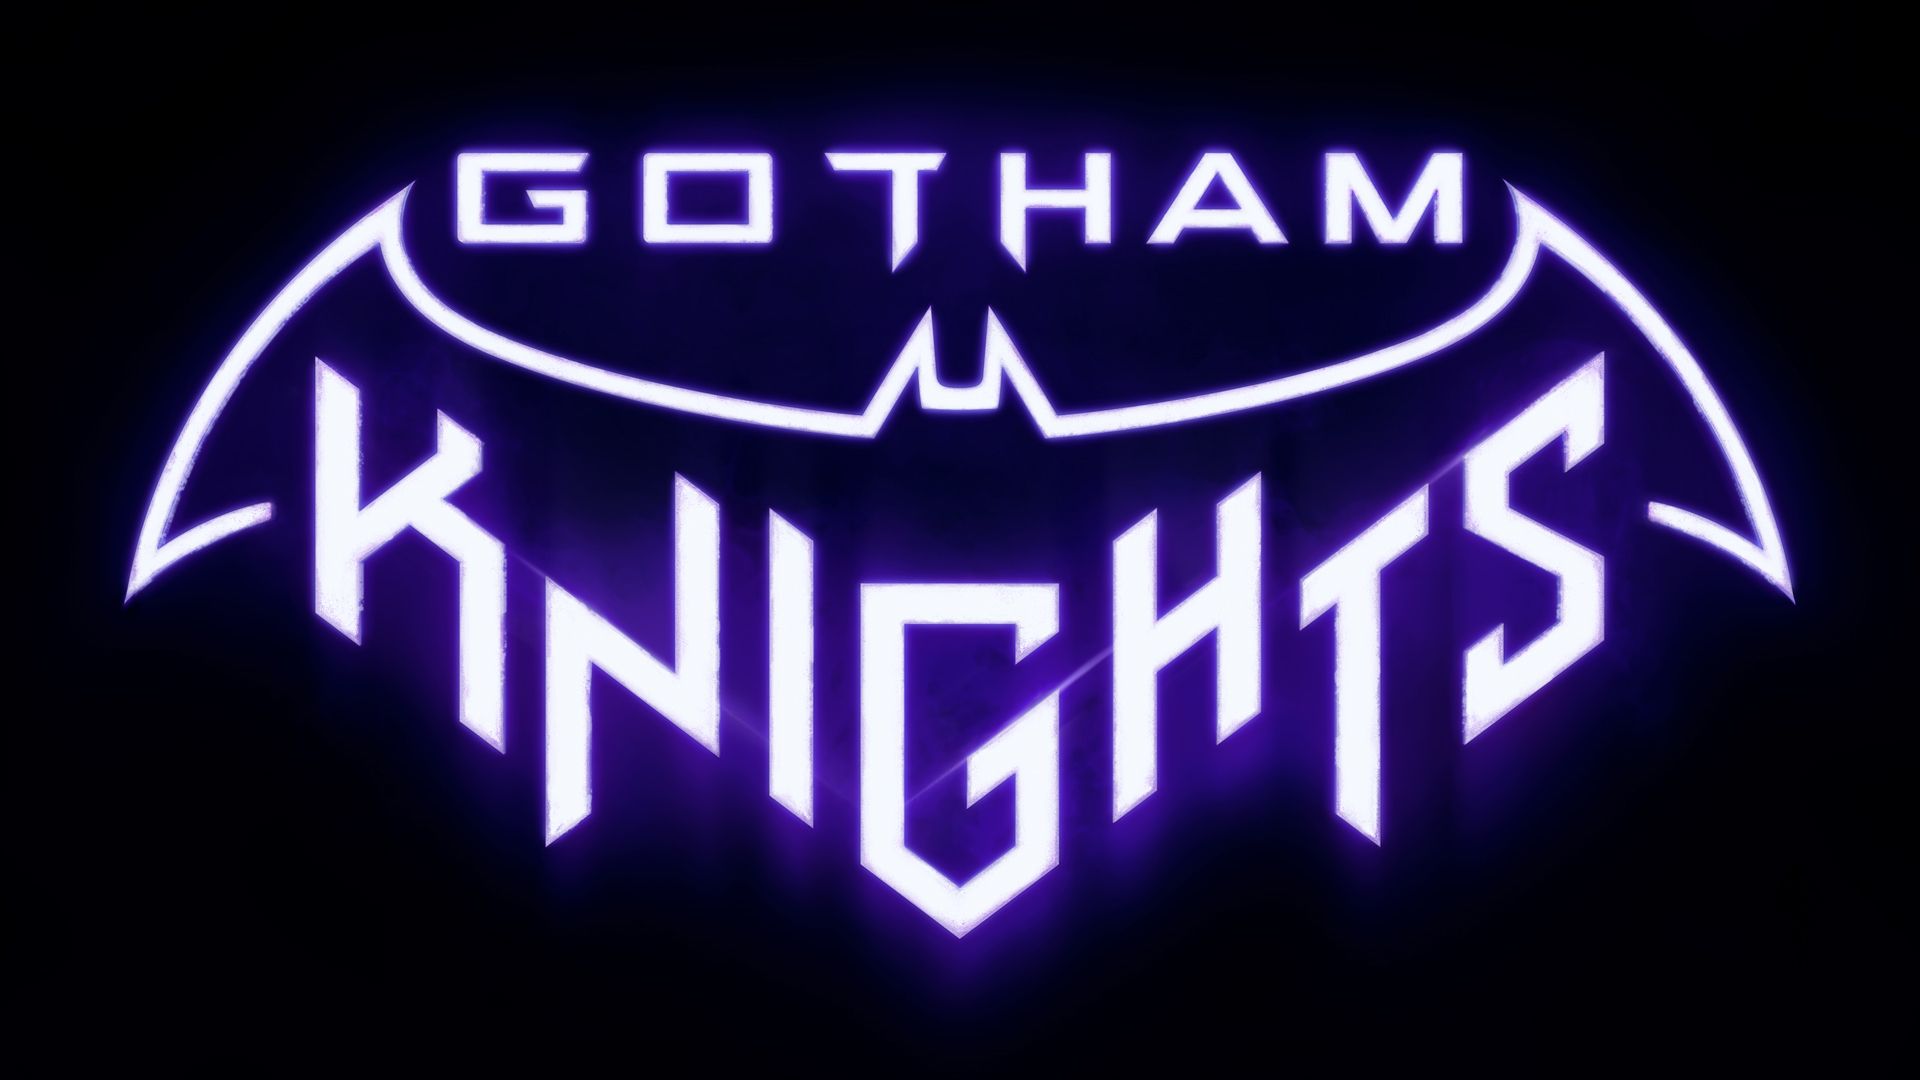 Batman Gotham Knights Game Wallpapers - Wallpaper Cave